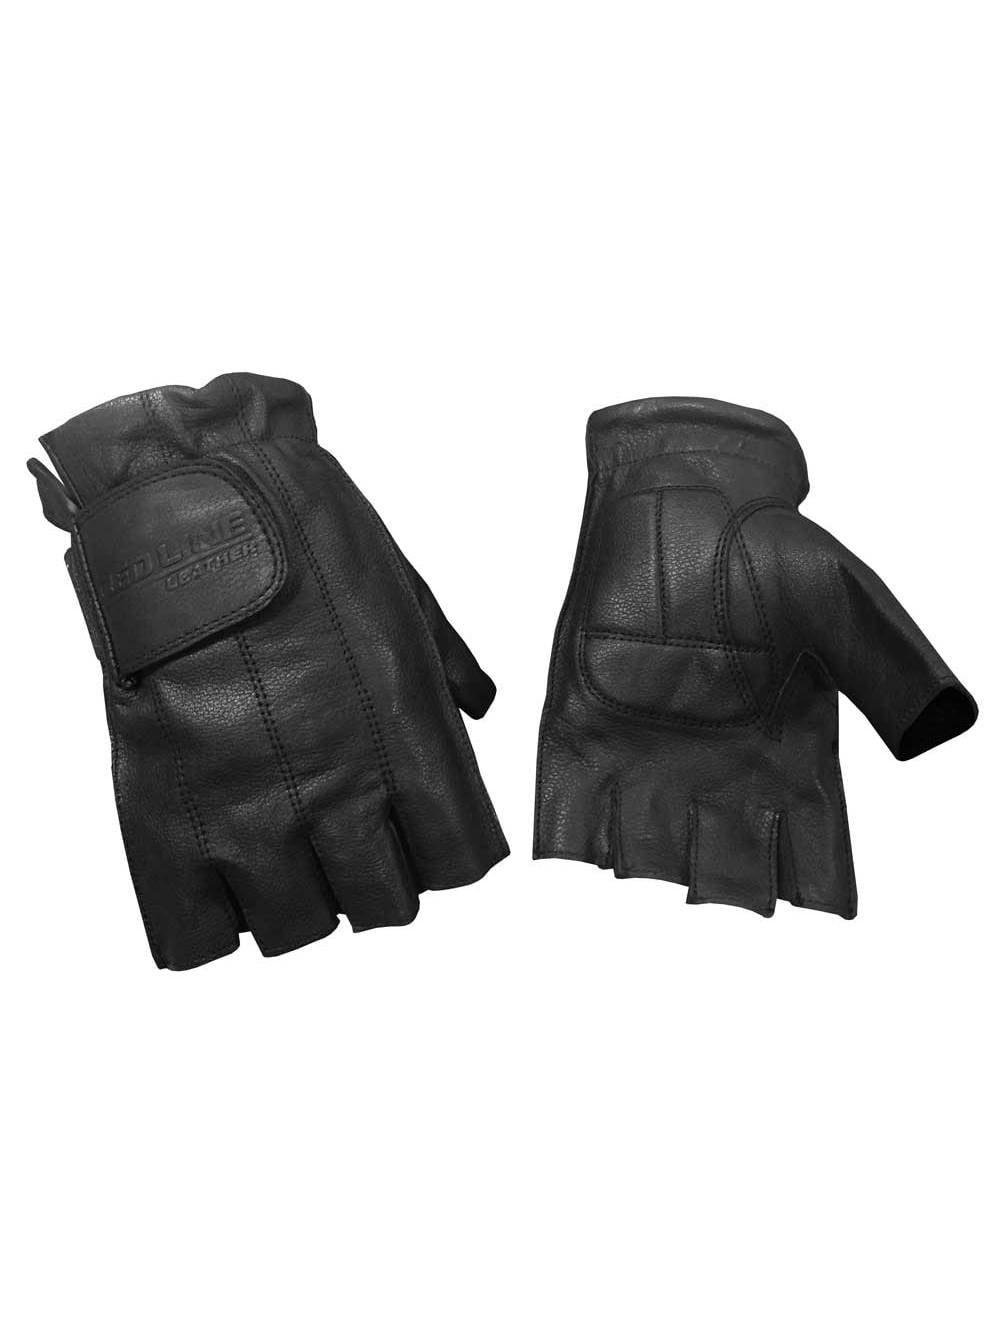 Black Leather FINGERLESS Gloves FLAMES Gel Palm Motorcycle Biker Rider Work Soft 